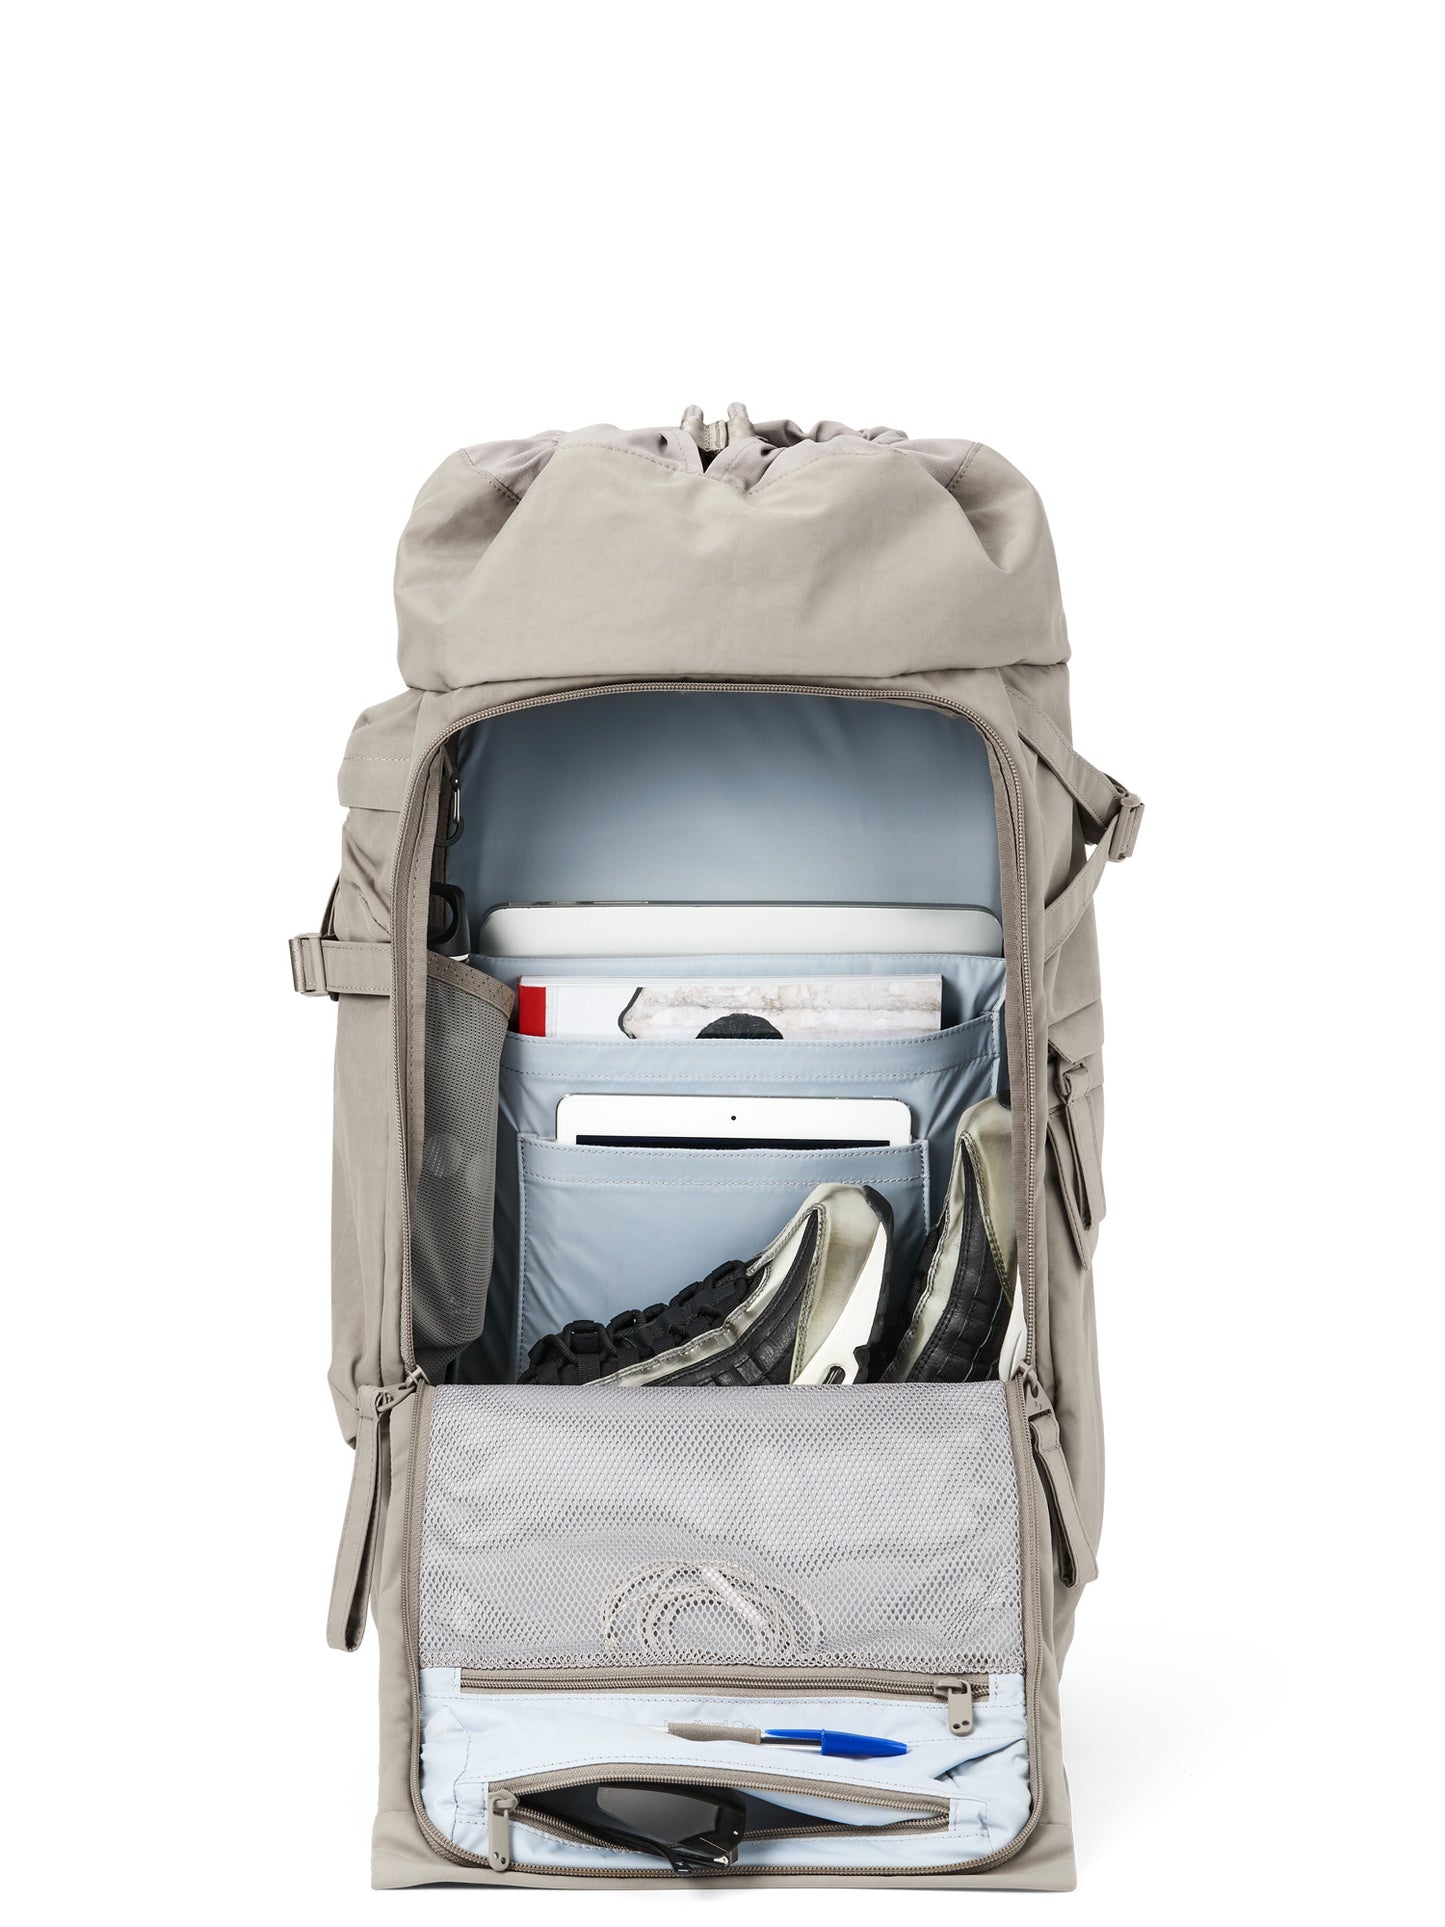 pinqponq-backpack-Blok-Medium-Crinkle-Taupe-open